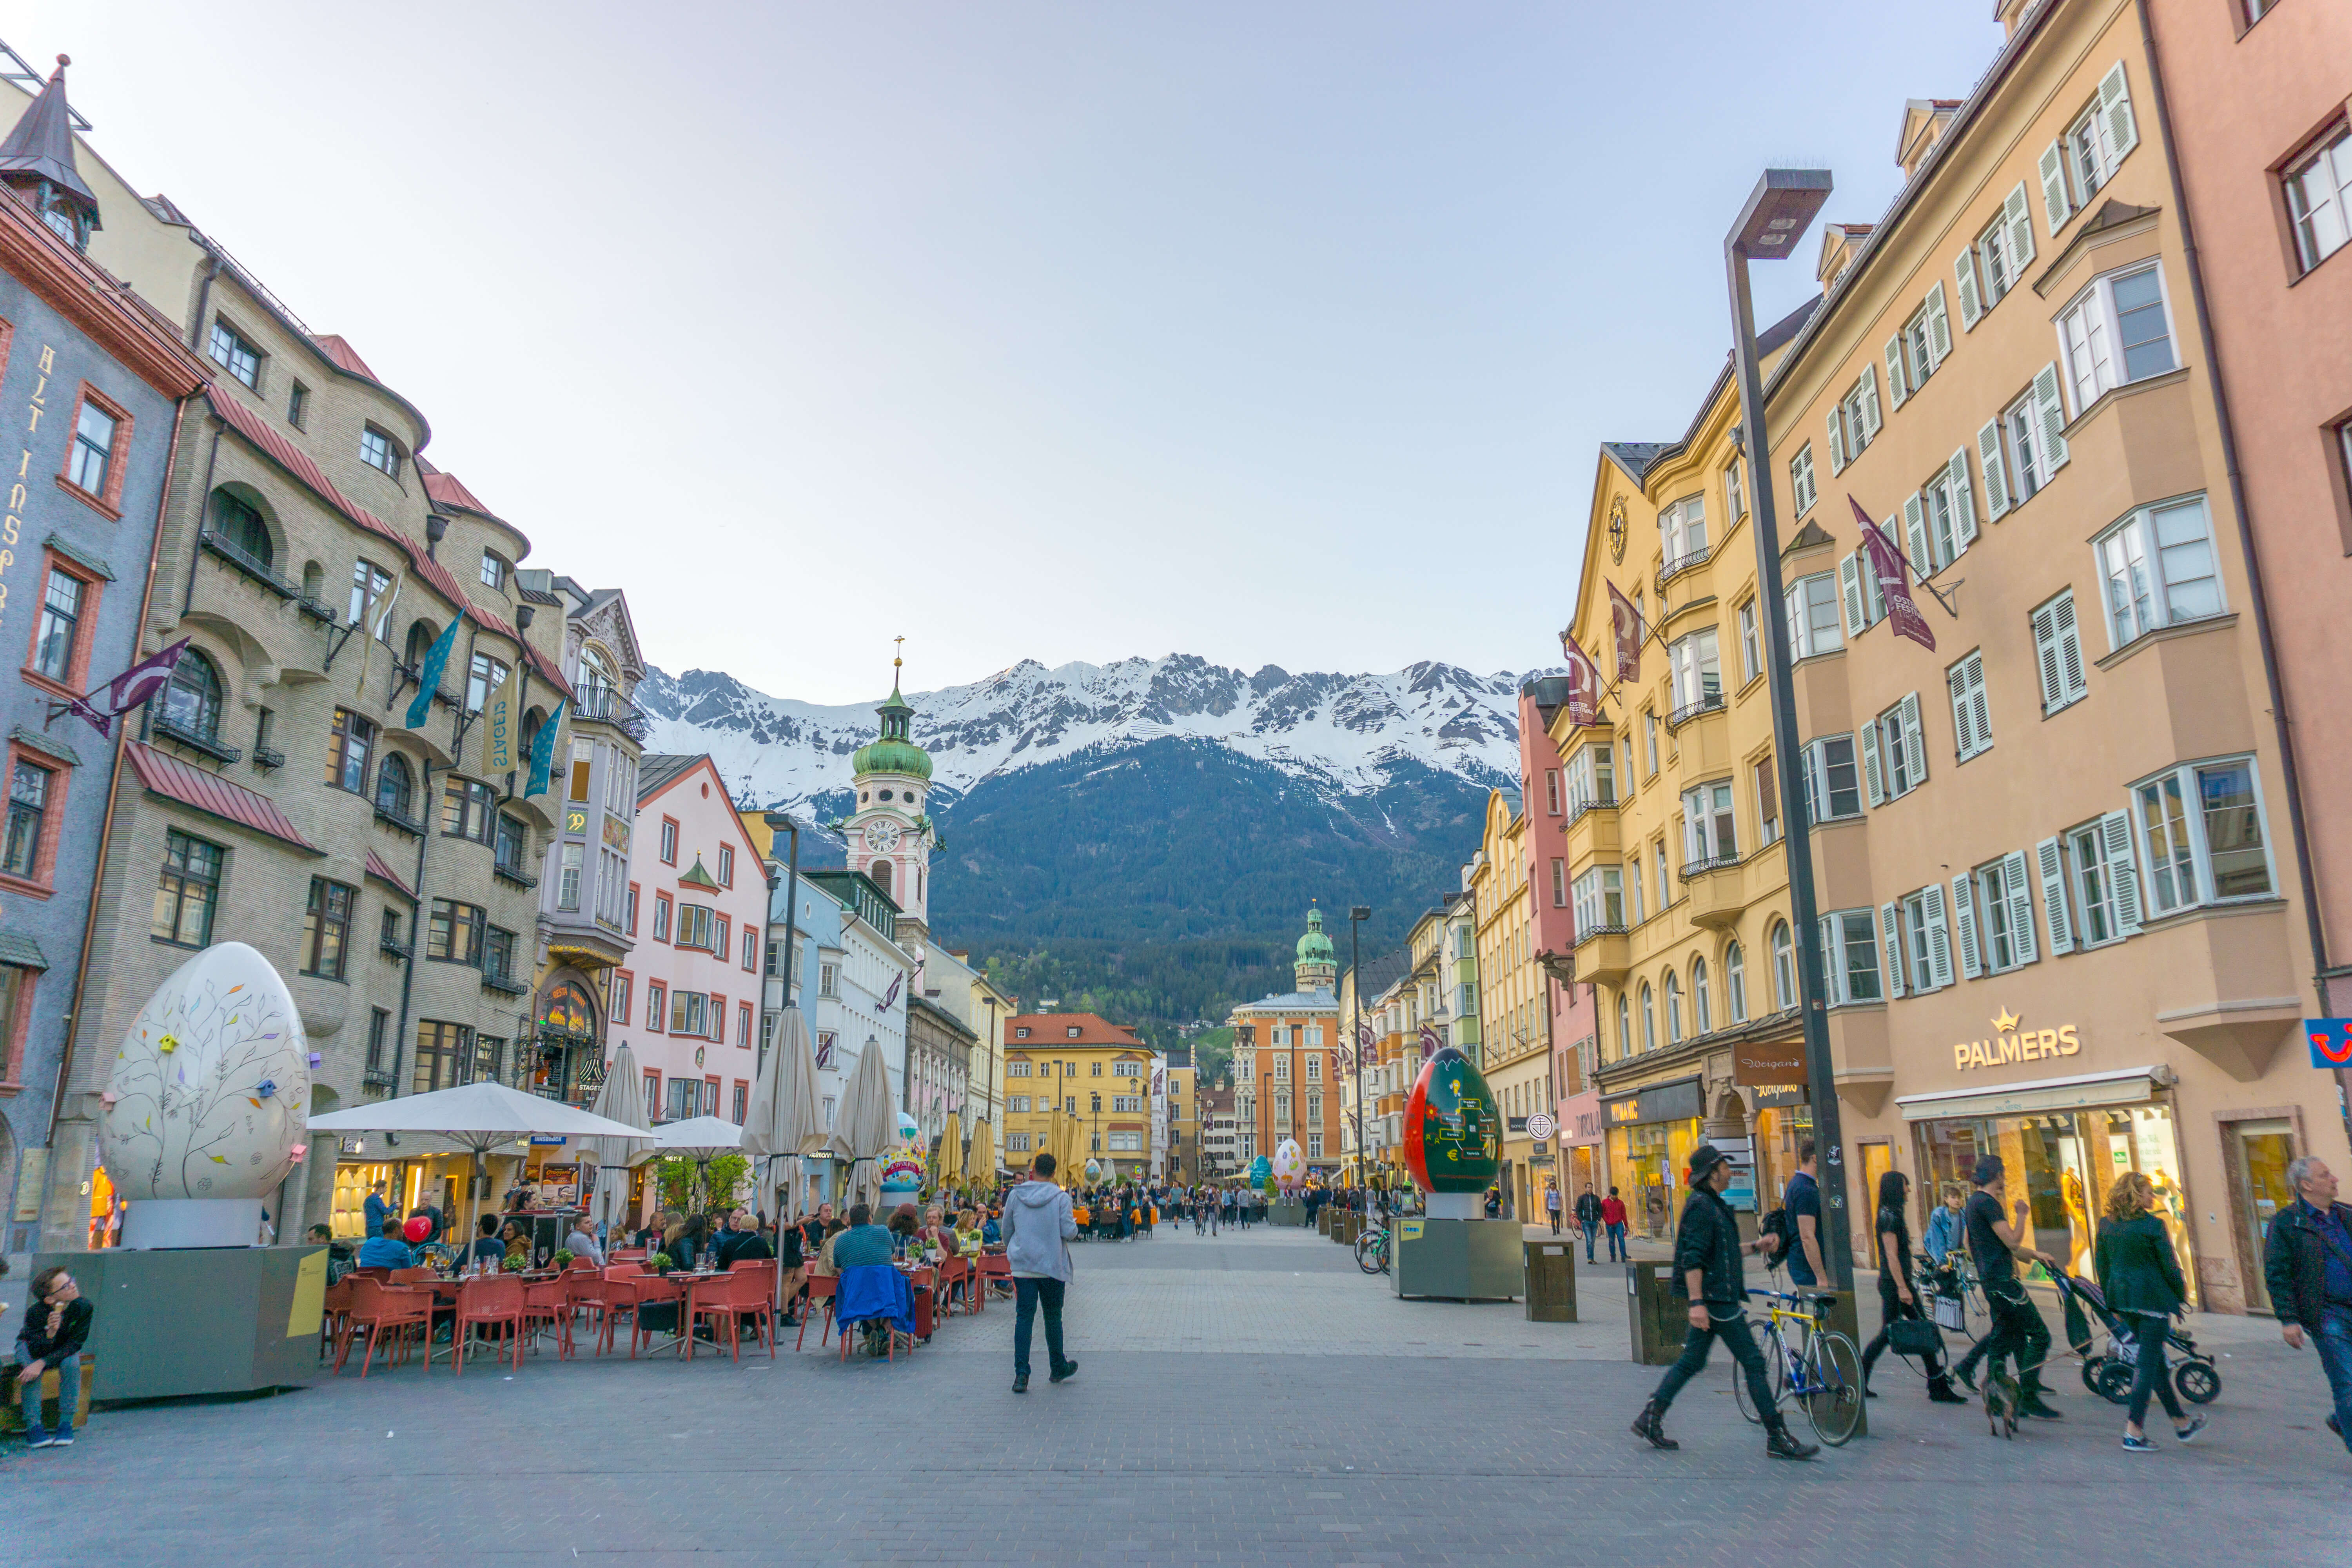 Innsbruck Card: The Best 10 Things to Do in Innsbruck, Austria